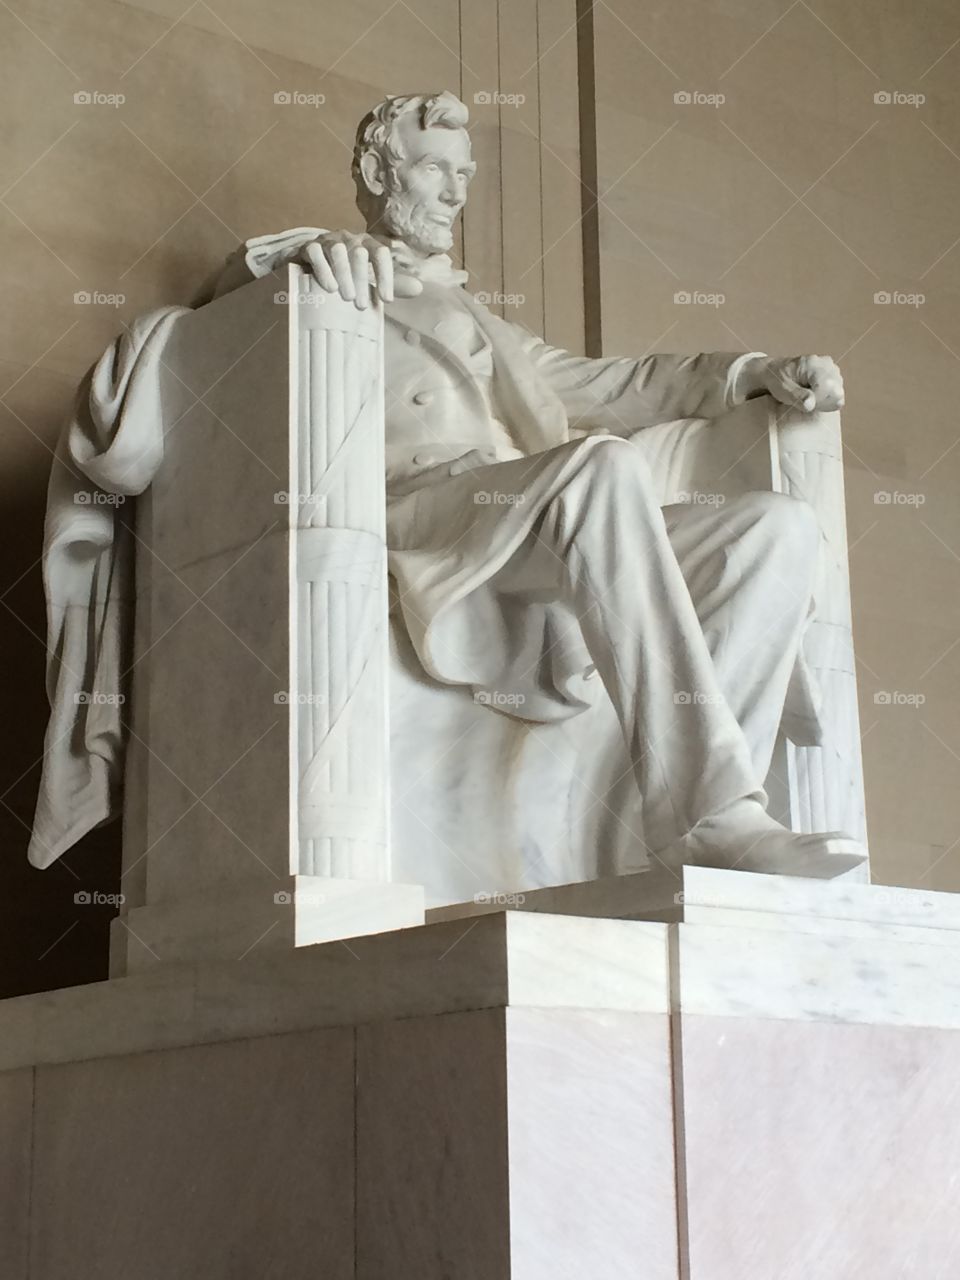 Honest Abe. Lincoln Memorial Washington, D.C. 